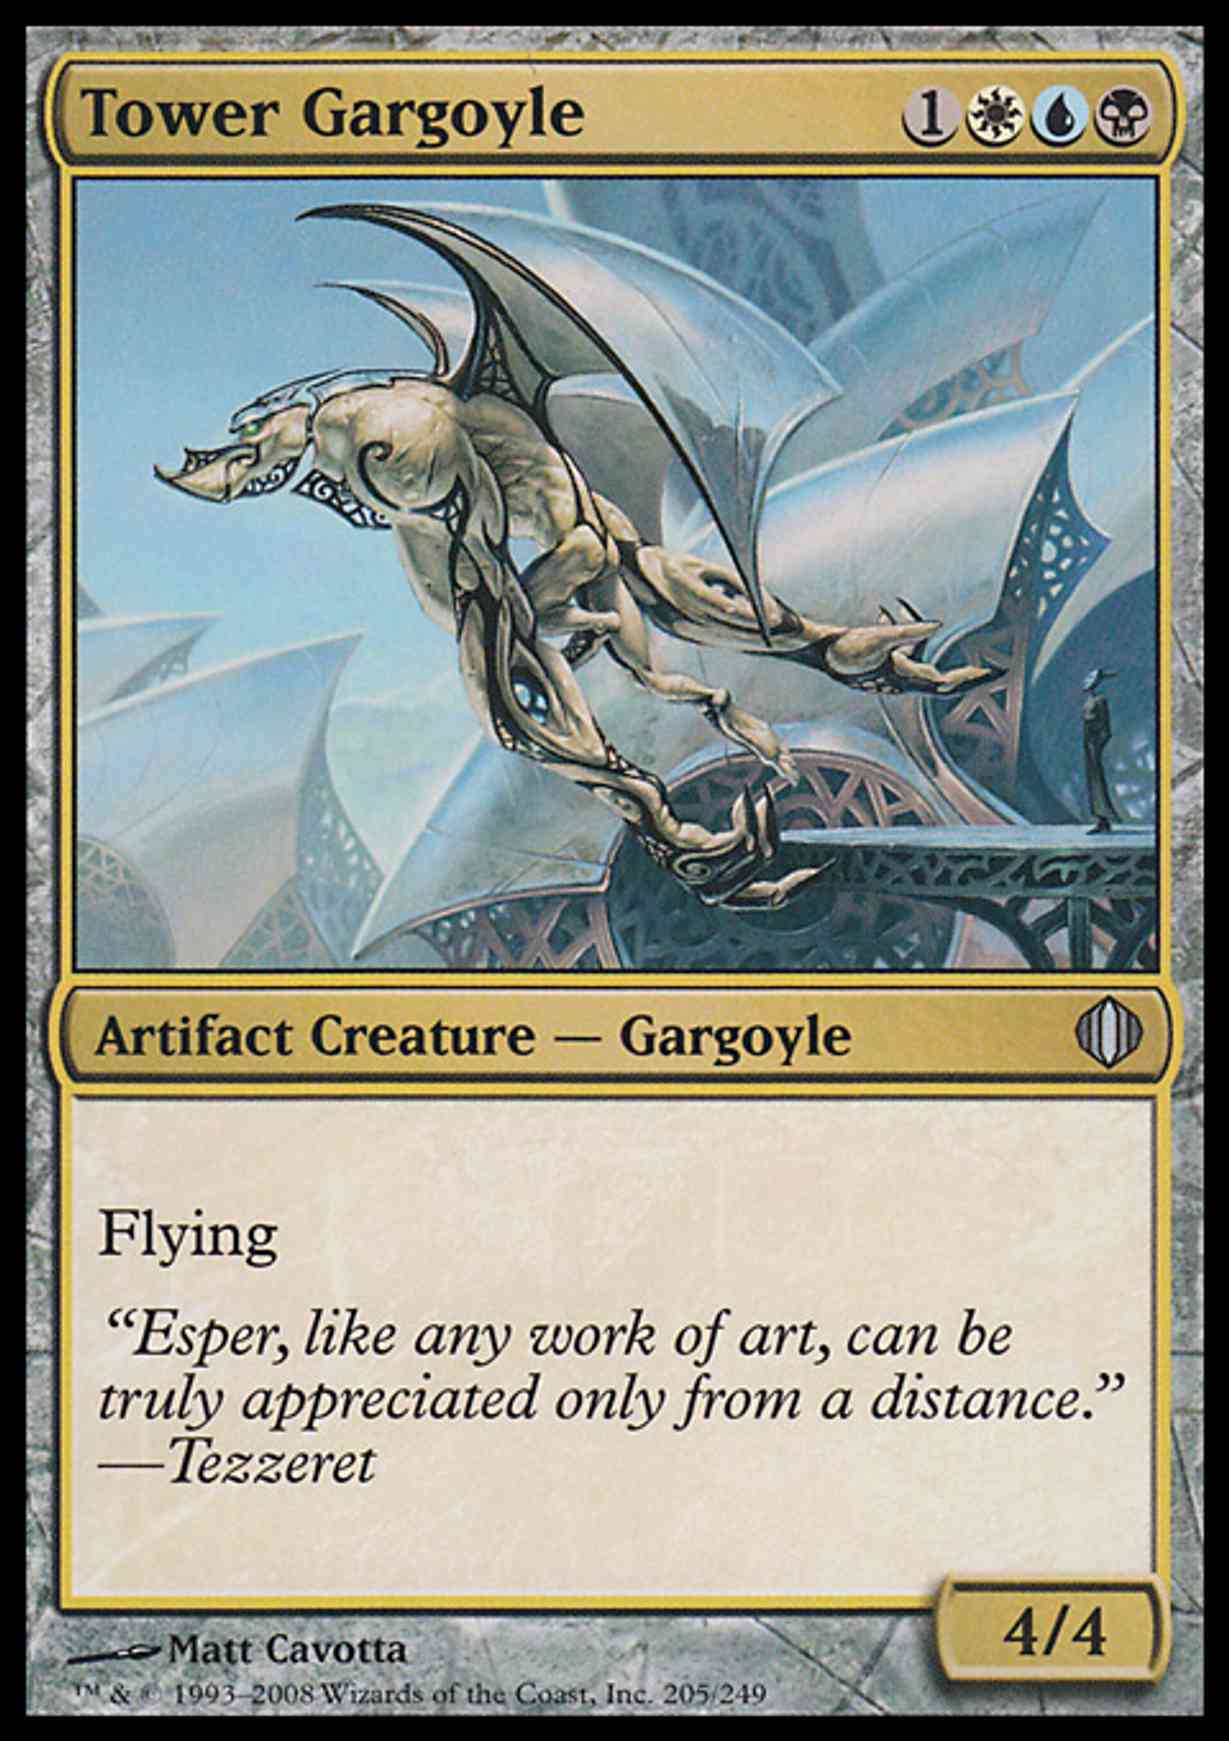 Tower Gargoyle magic card front